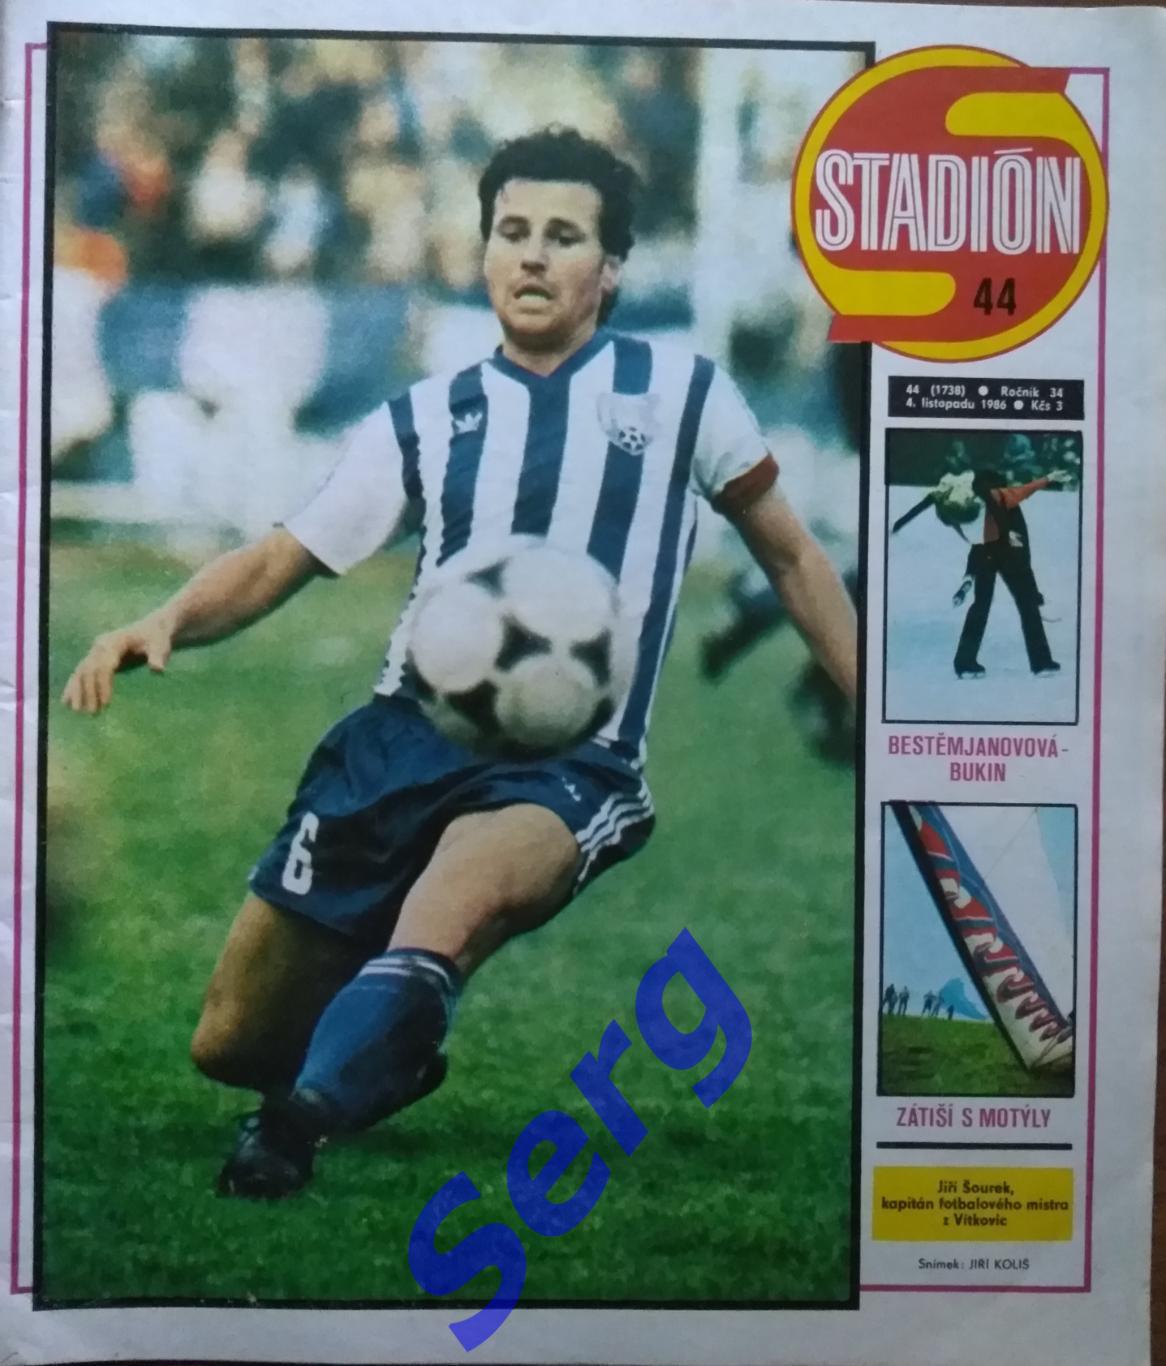 Журнал Стадион (Stadion) №44 1986 год